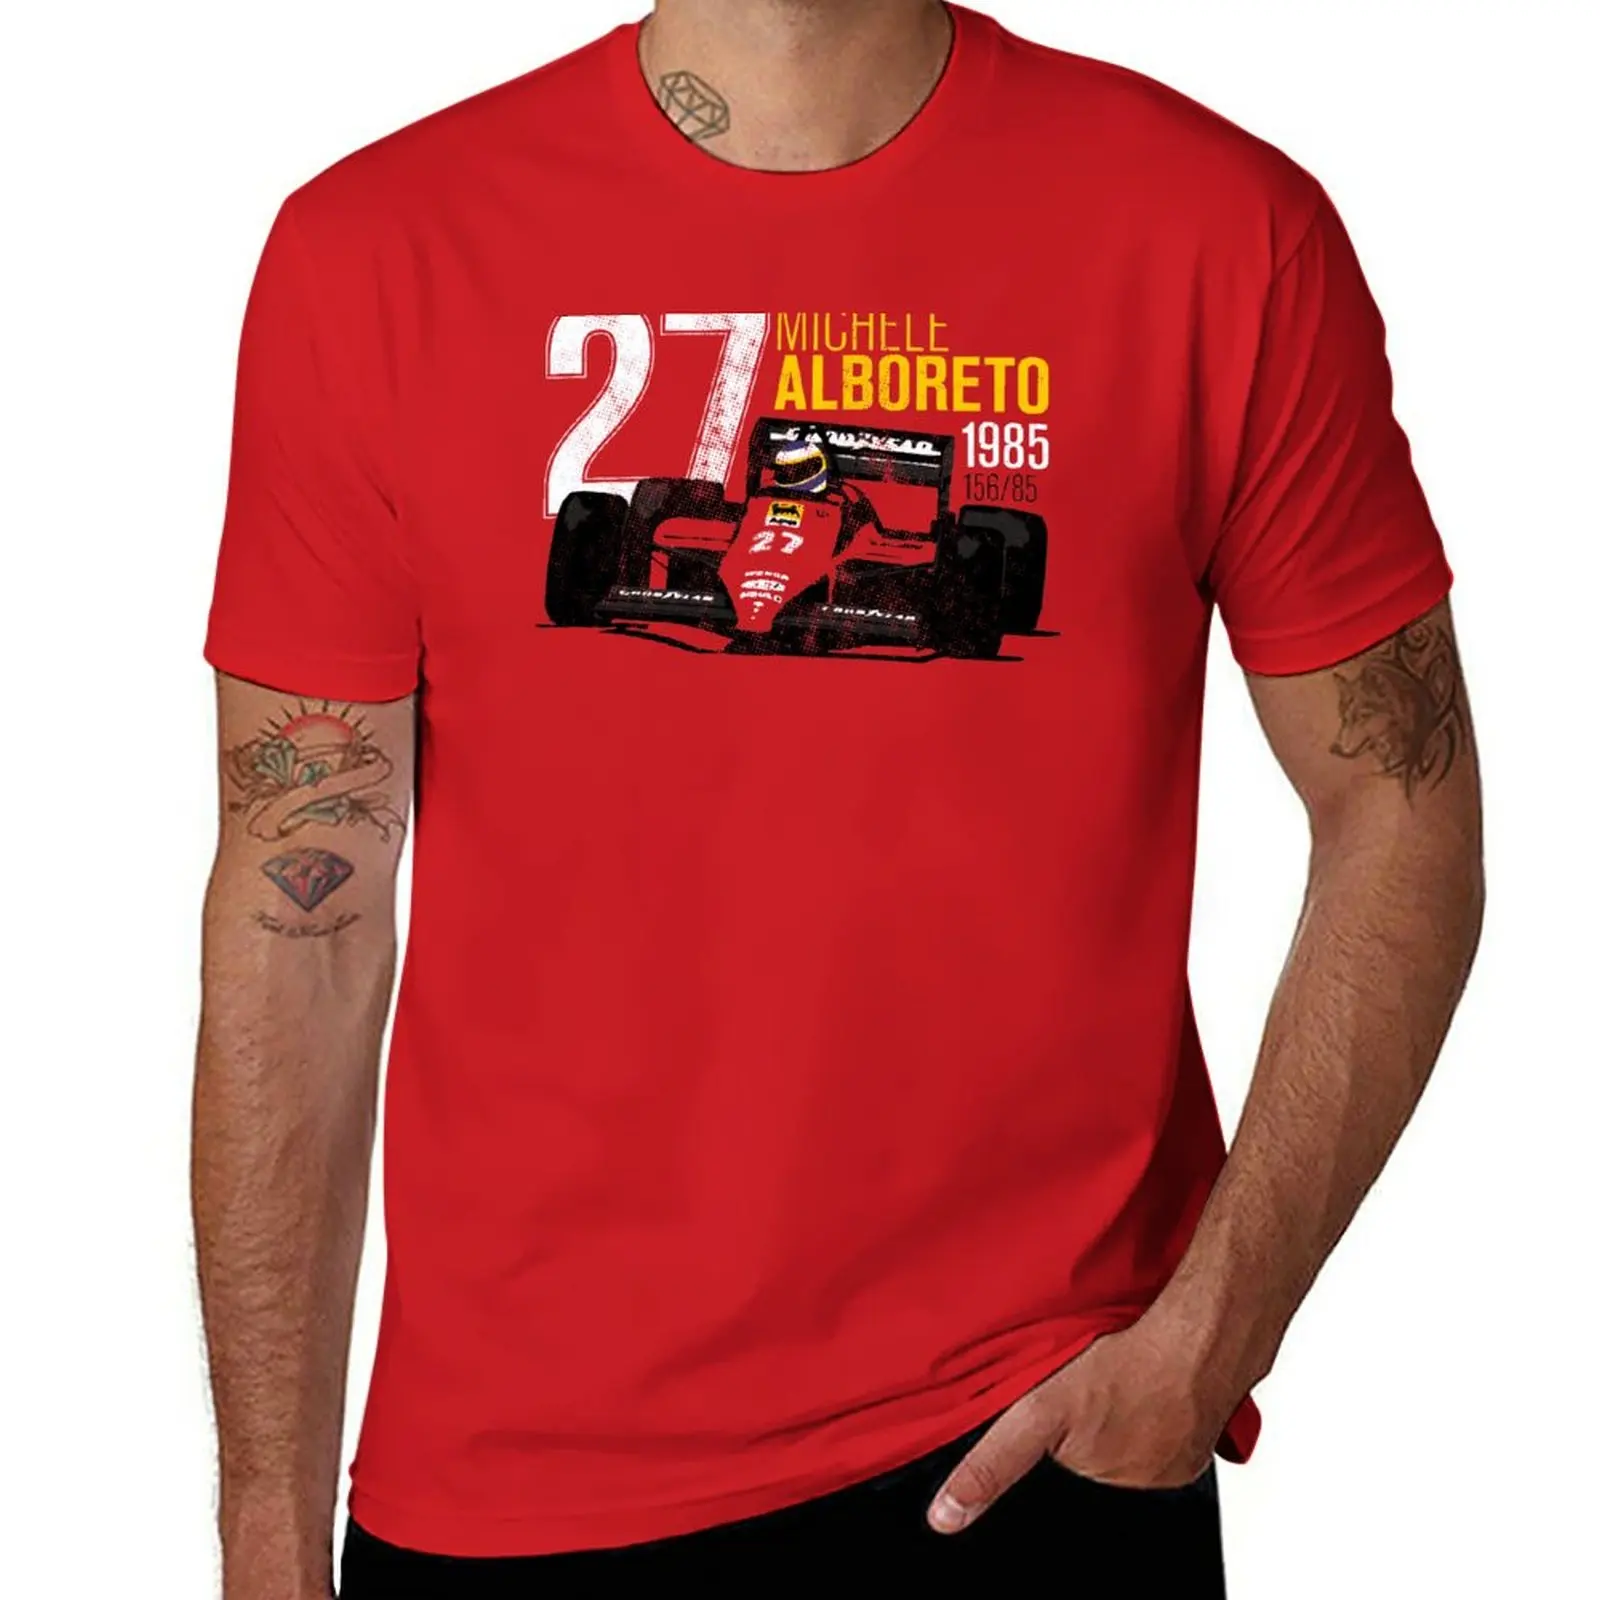 

Michele Alboreto 1985 футболка Tribute быстросохнущая аниме одежда Мужские Простые футболки